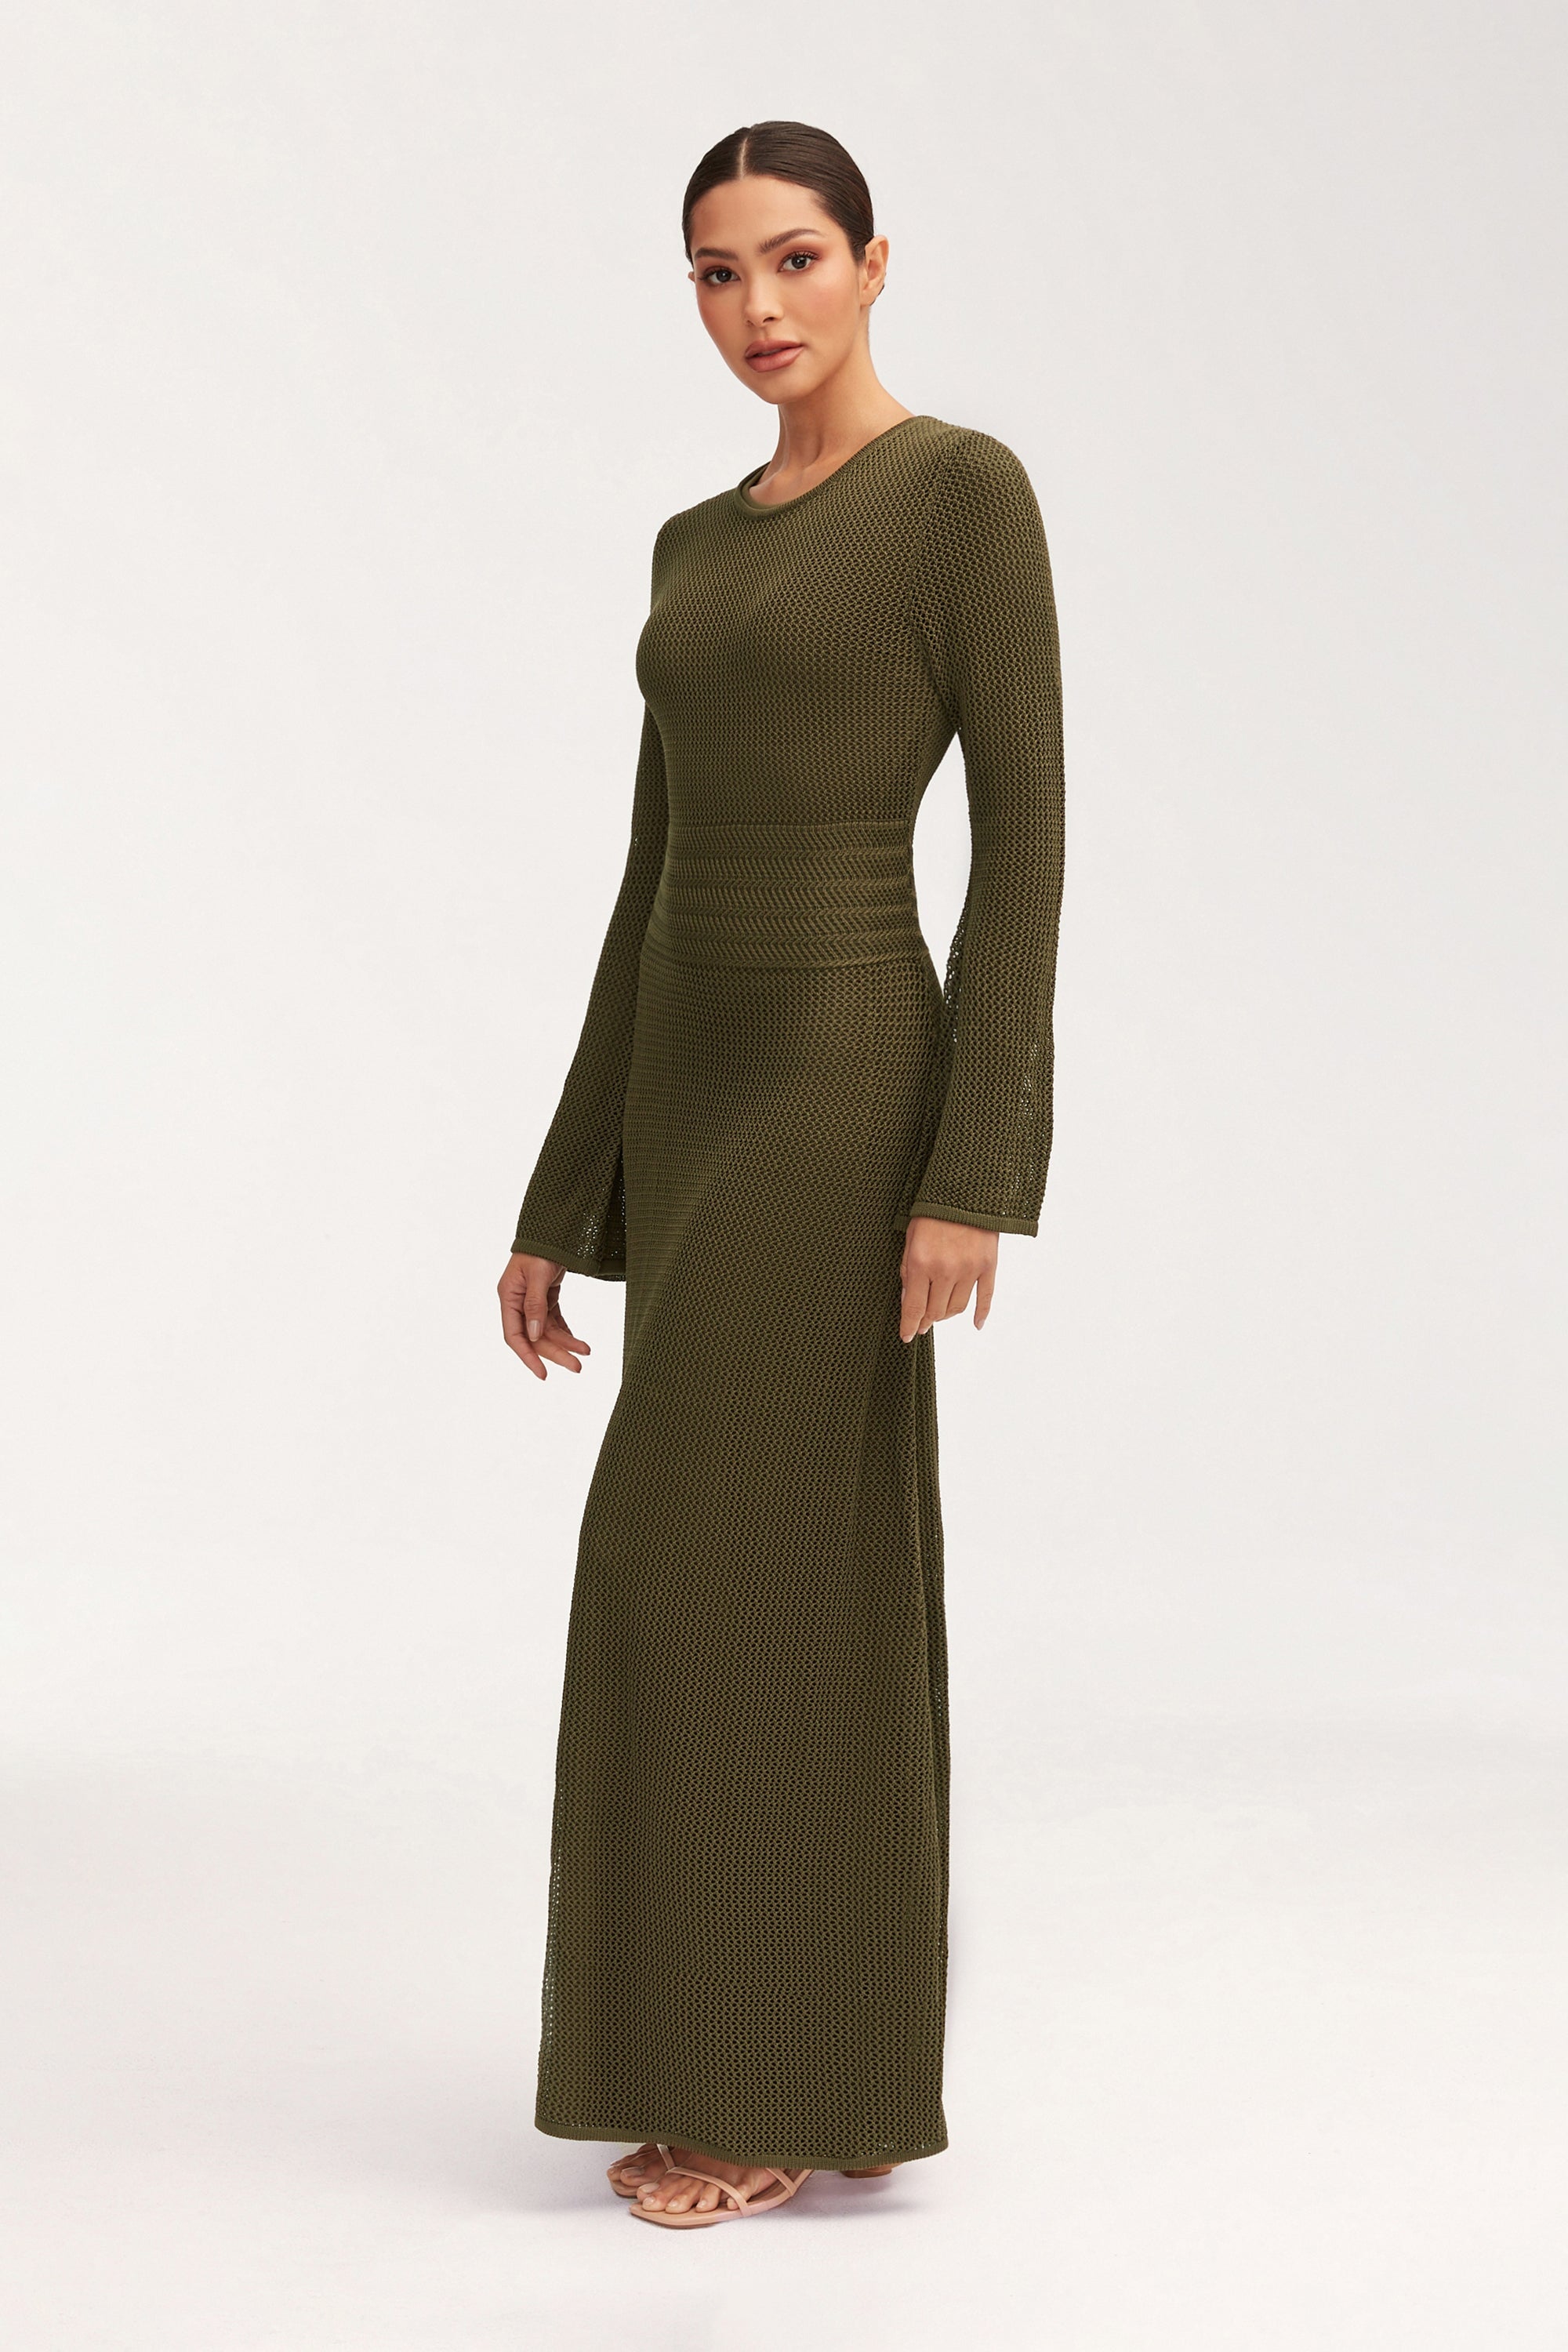 Rachel Crochet Maxi Dress - Dark Olive Clothing Veiled 